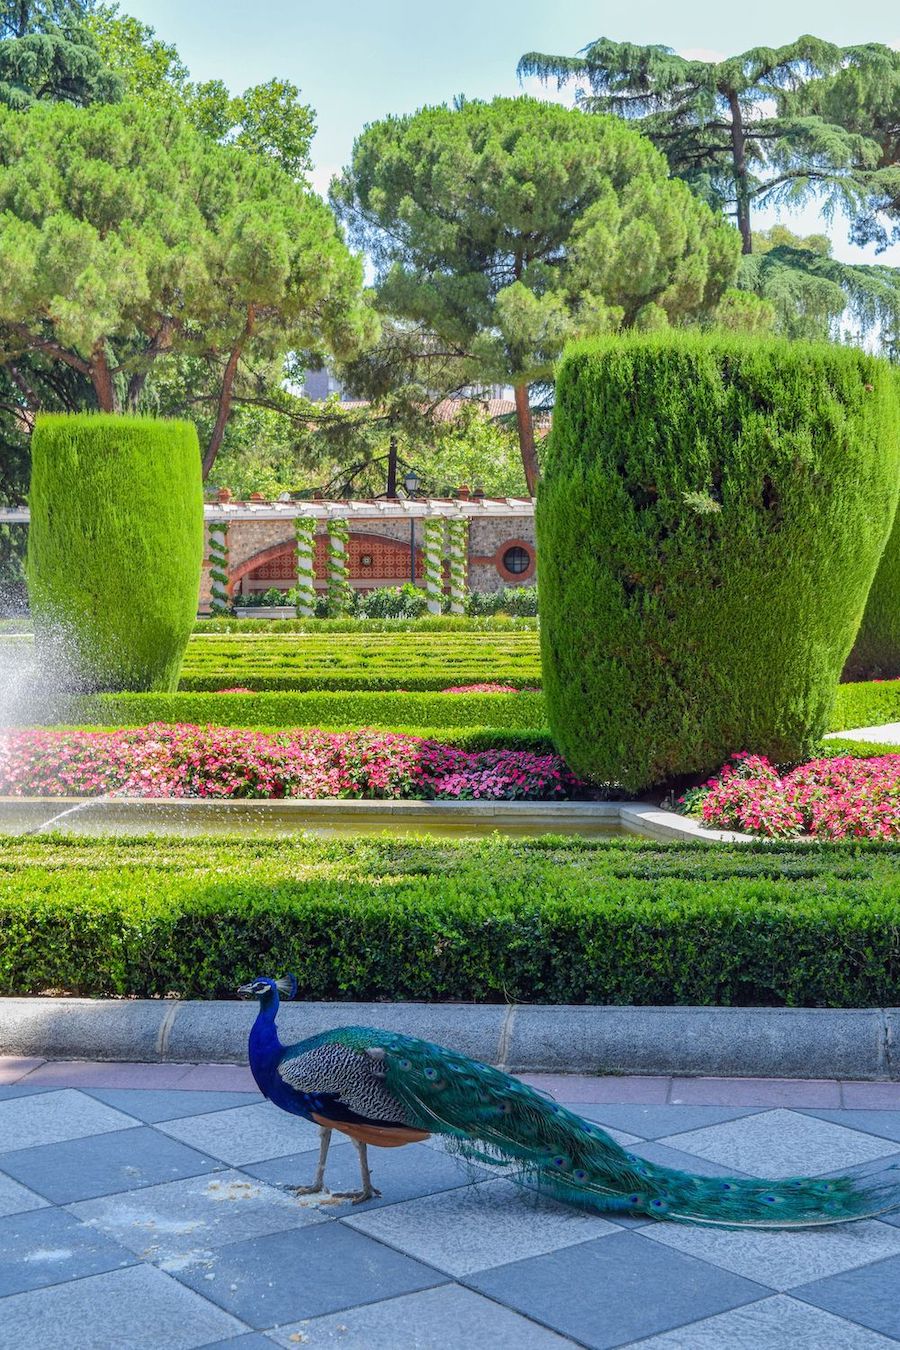 Peacocks in Madrid!